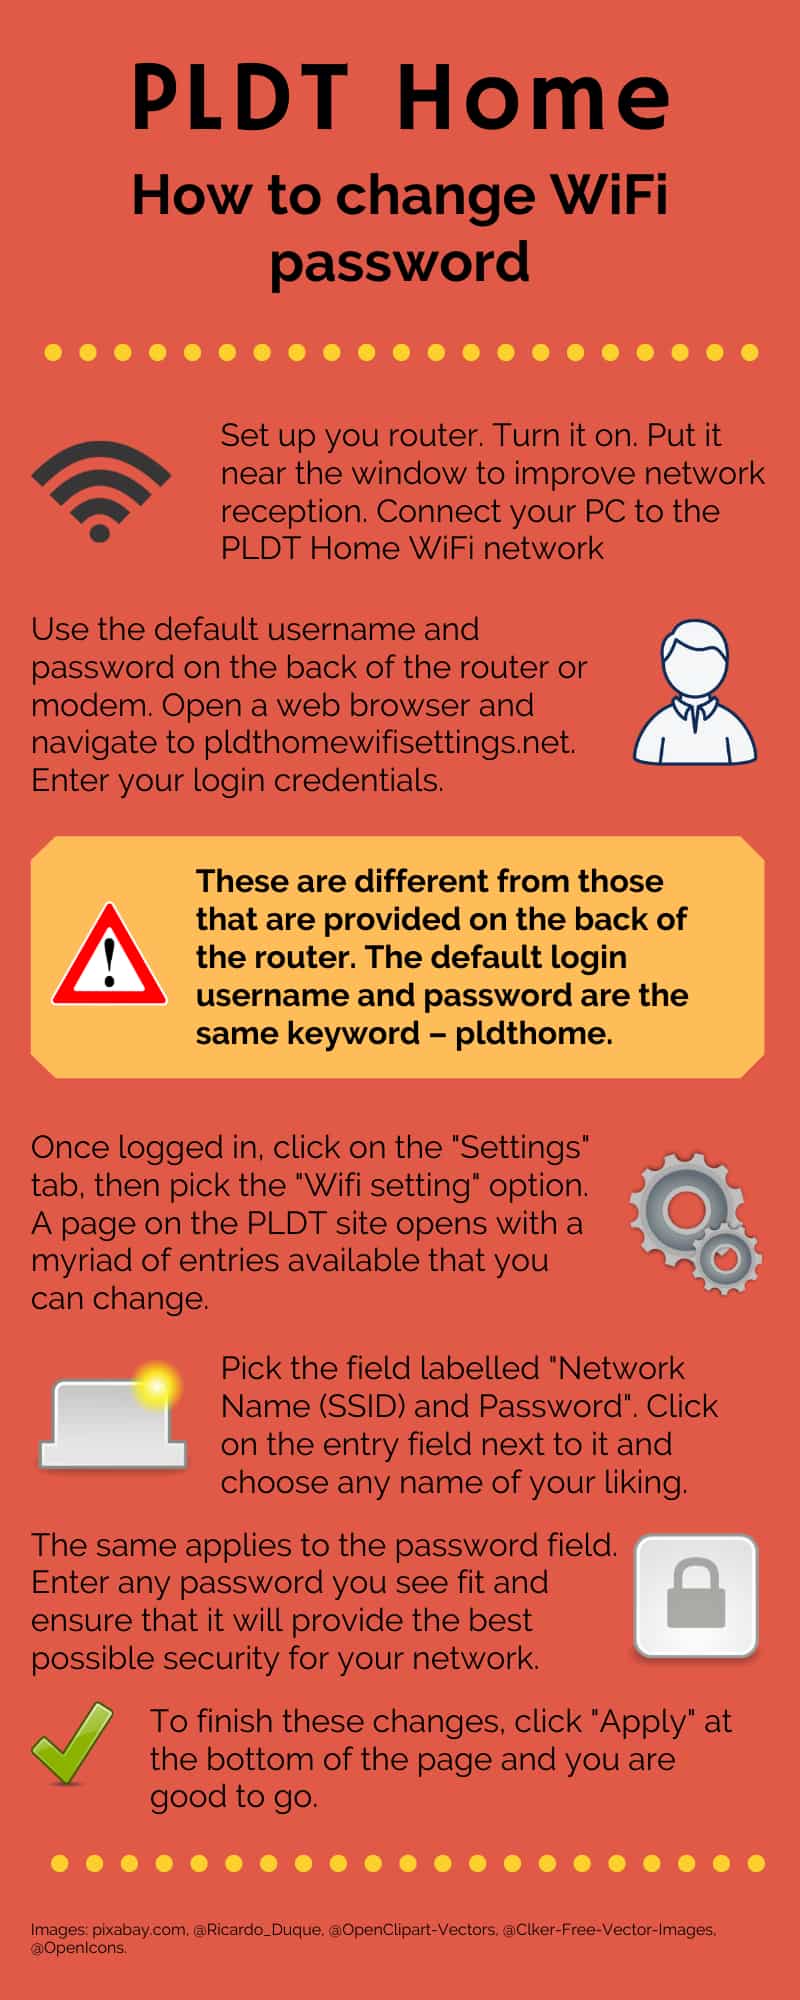 How to change WiFi password PLDT